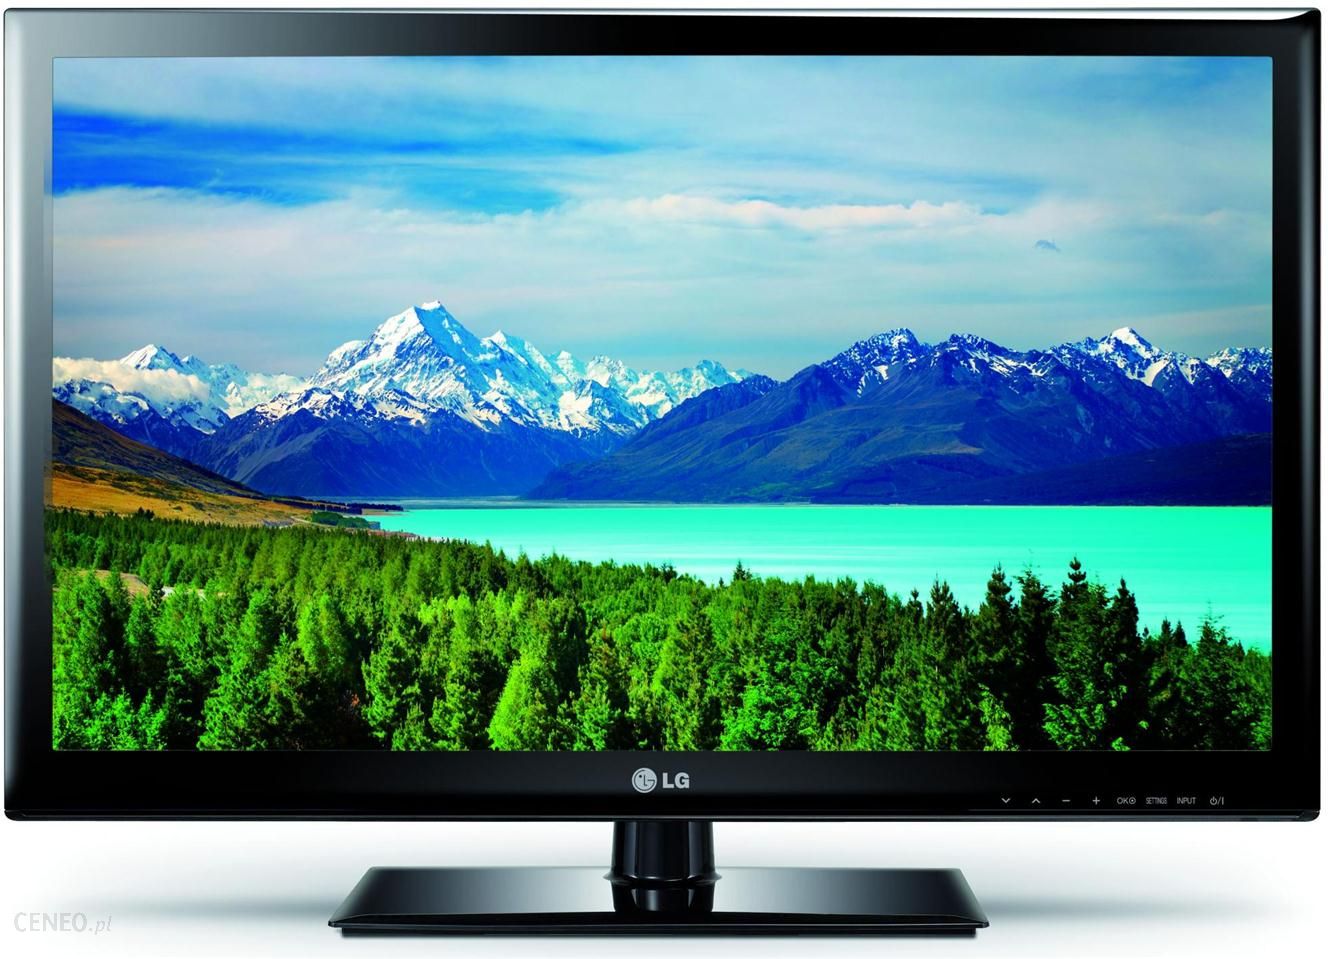 Авито купить телевизор lg. Телевизор ЛГ 32 дюйма. LG 32lh519u. Телевизор LG 26 дюймов. LG 32ls3400.